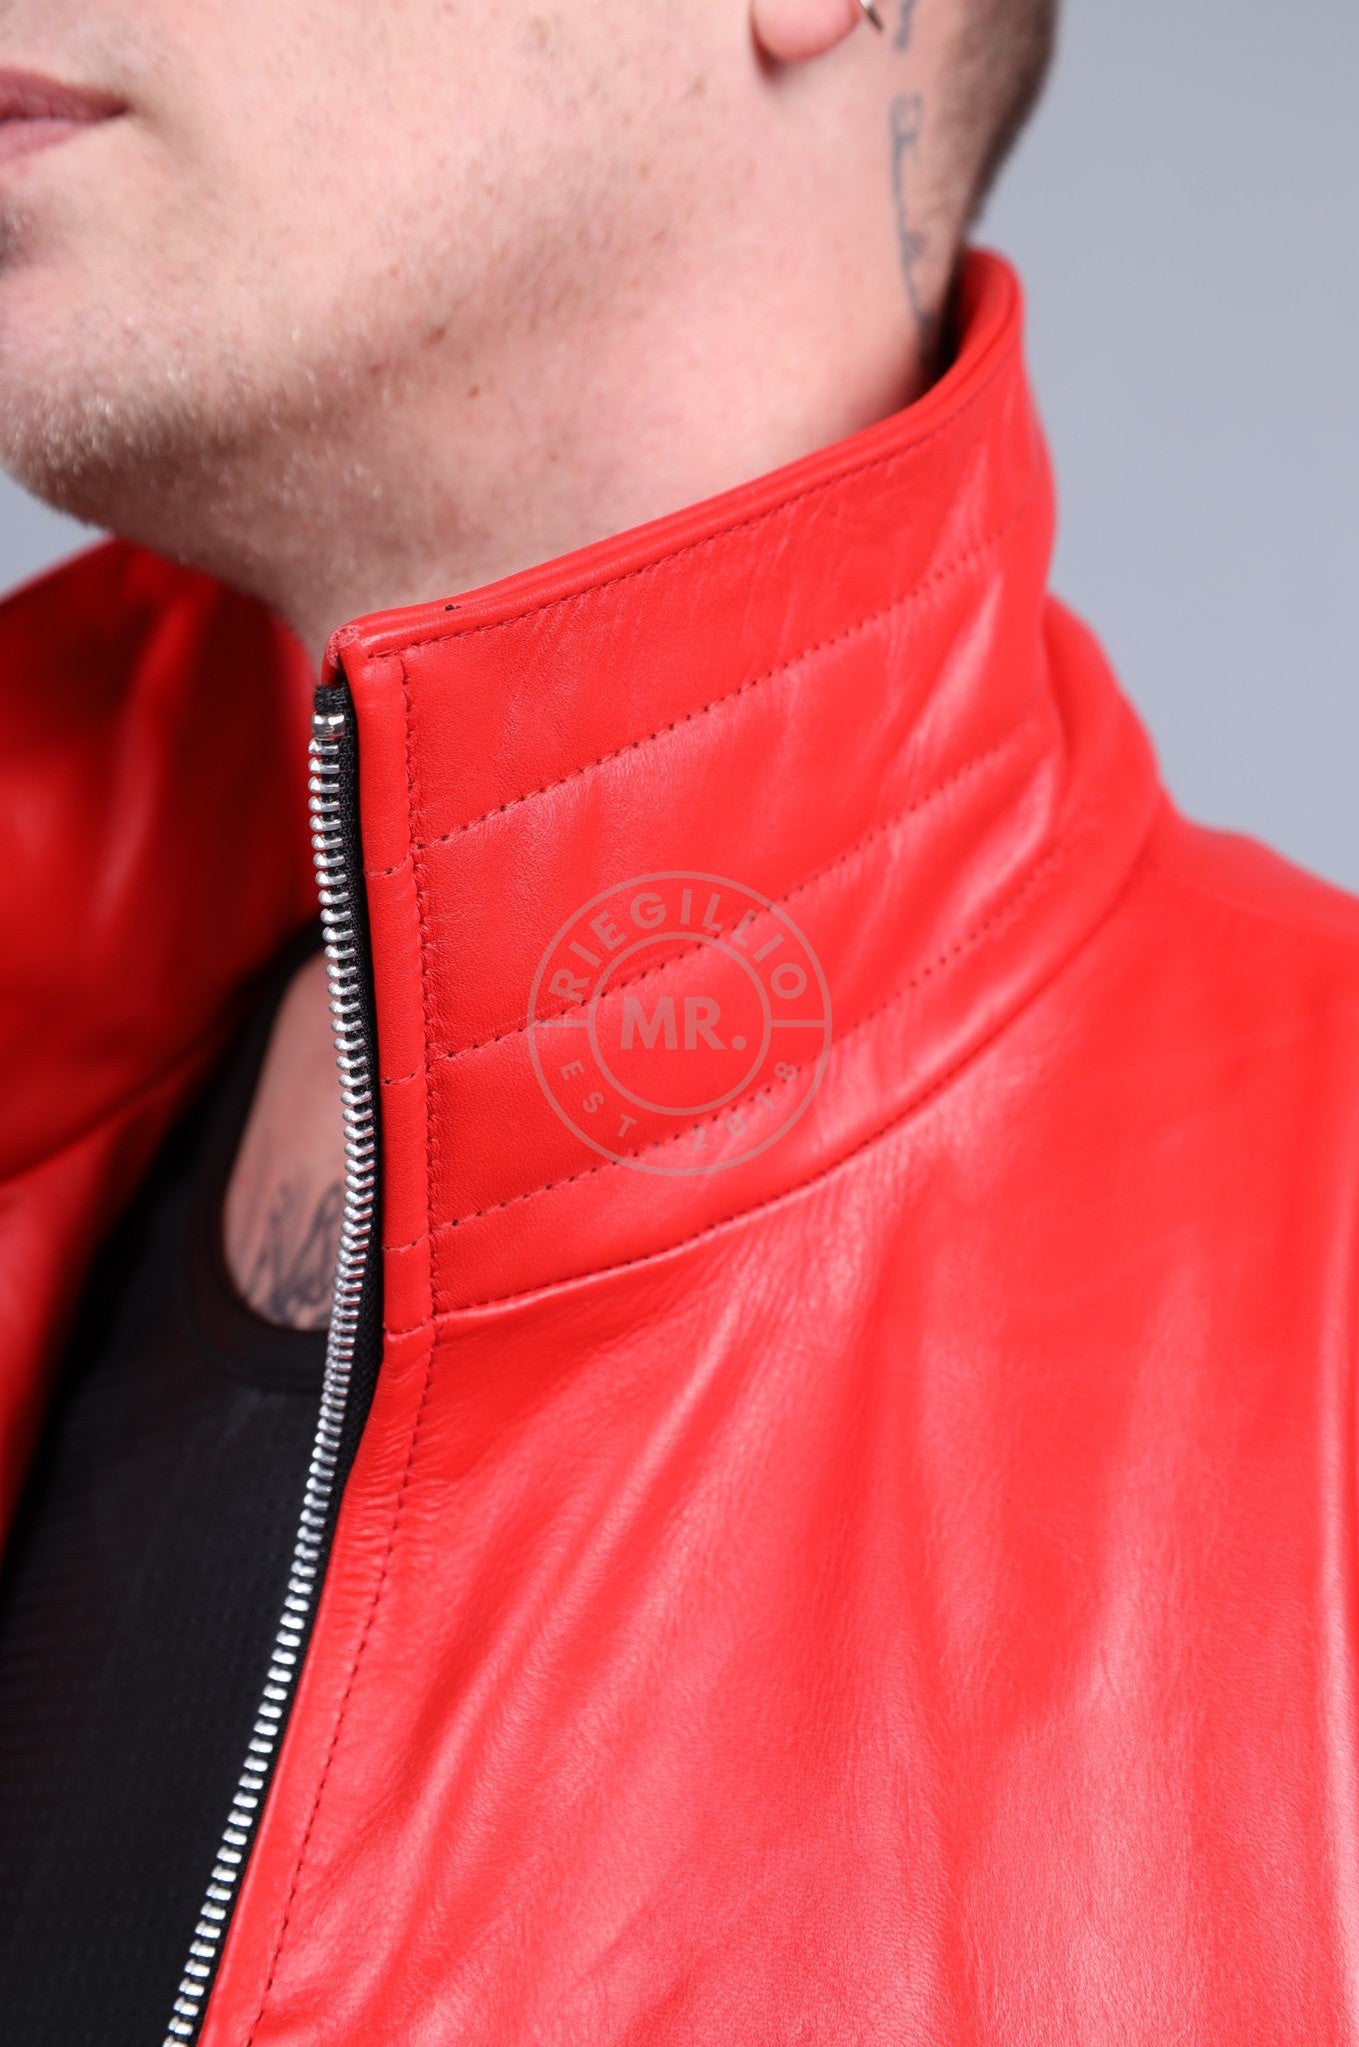 Xtreme Loose Leather Tracksuit Jacket-at MR. Riegillio